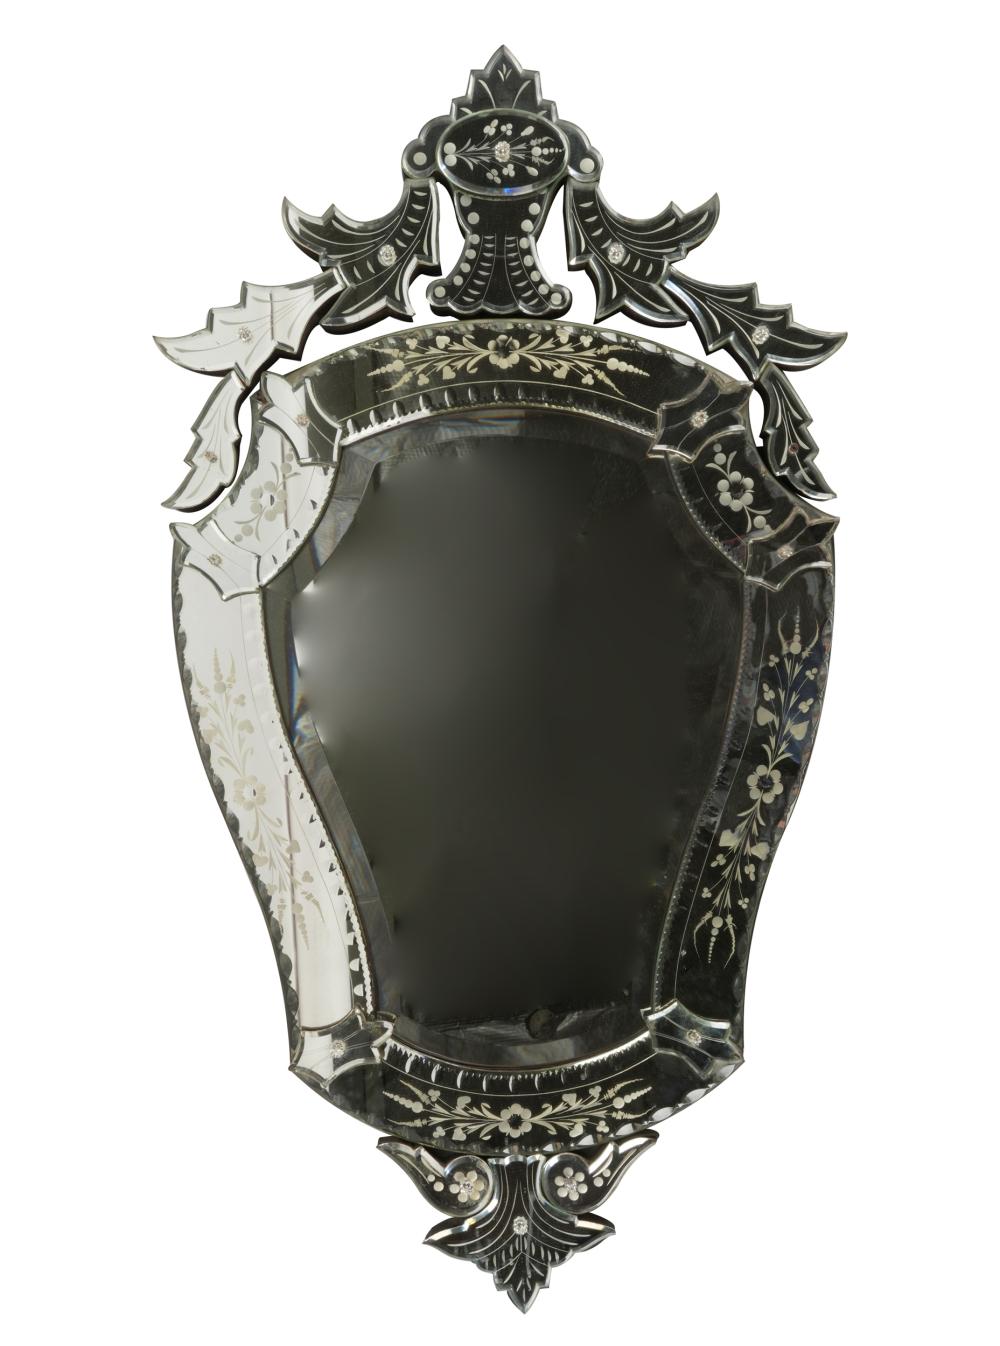 VENETIAN GLASS WALL MIRRORthe cartouche-shaped